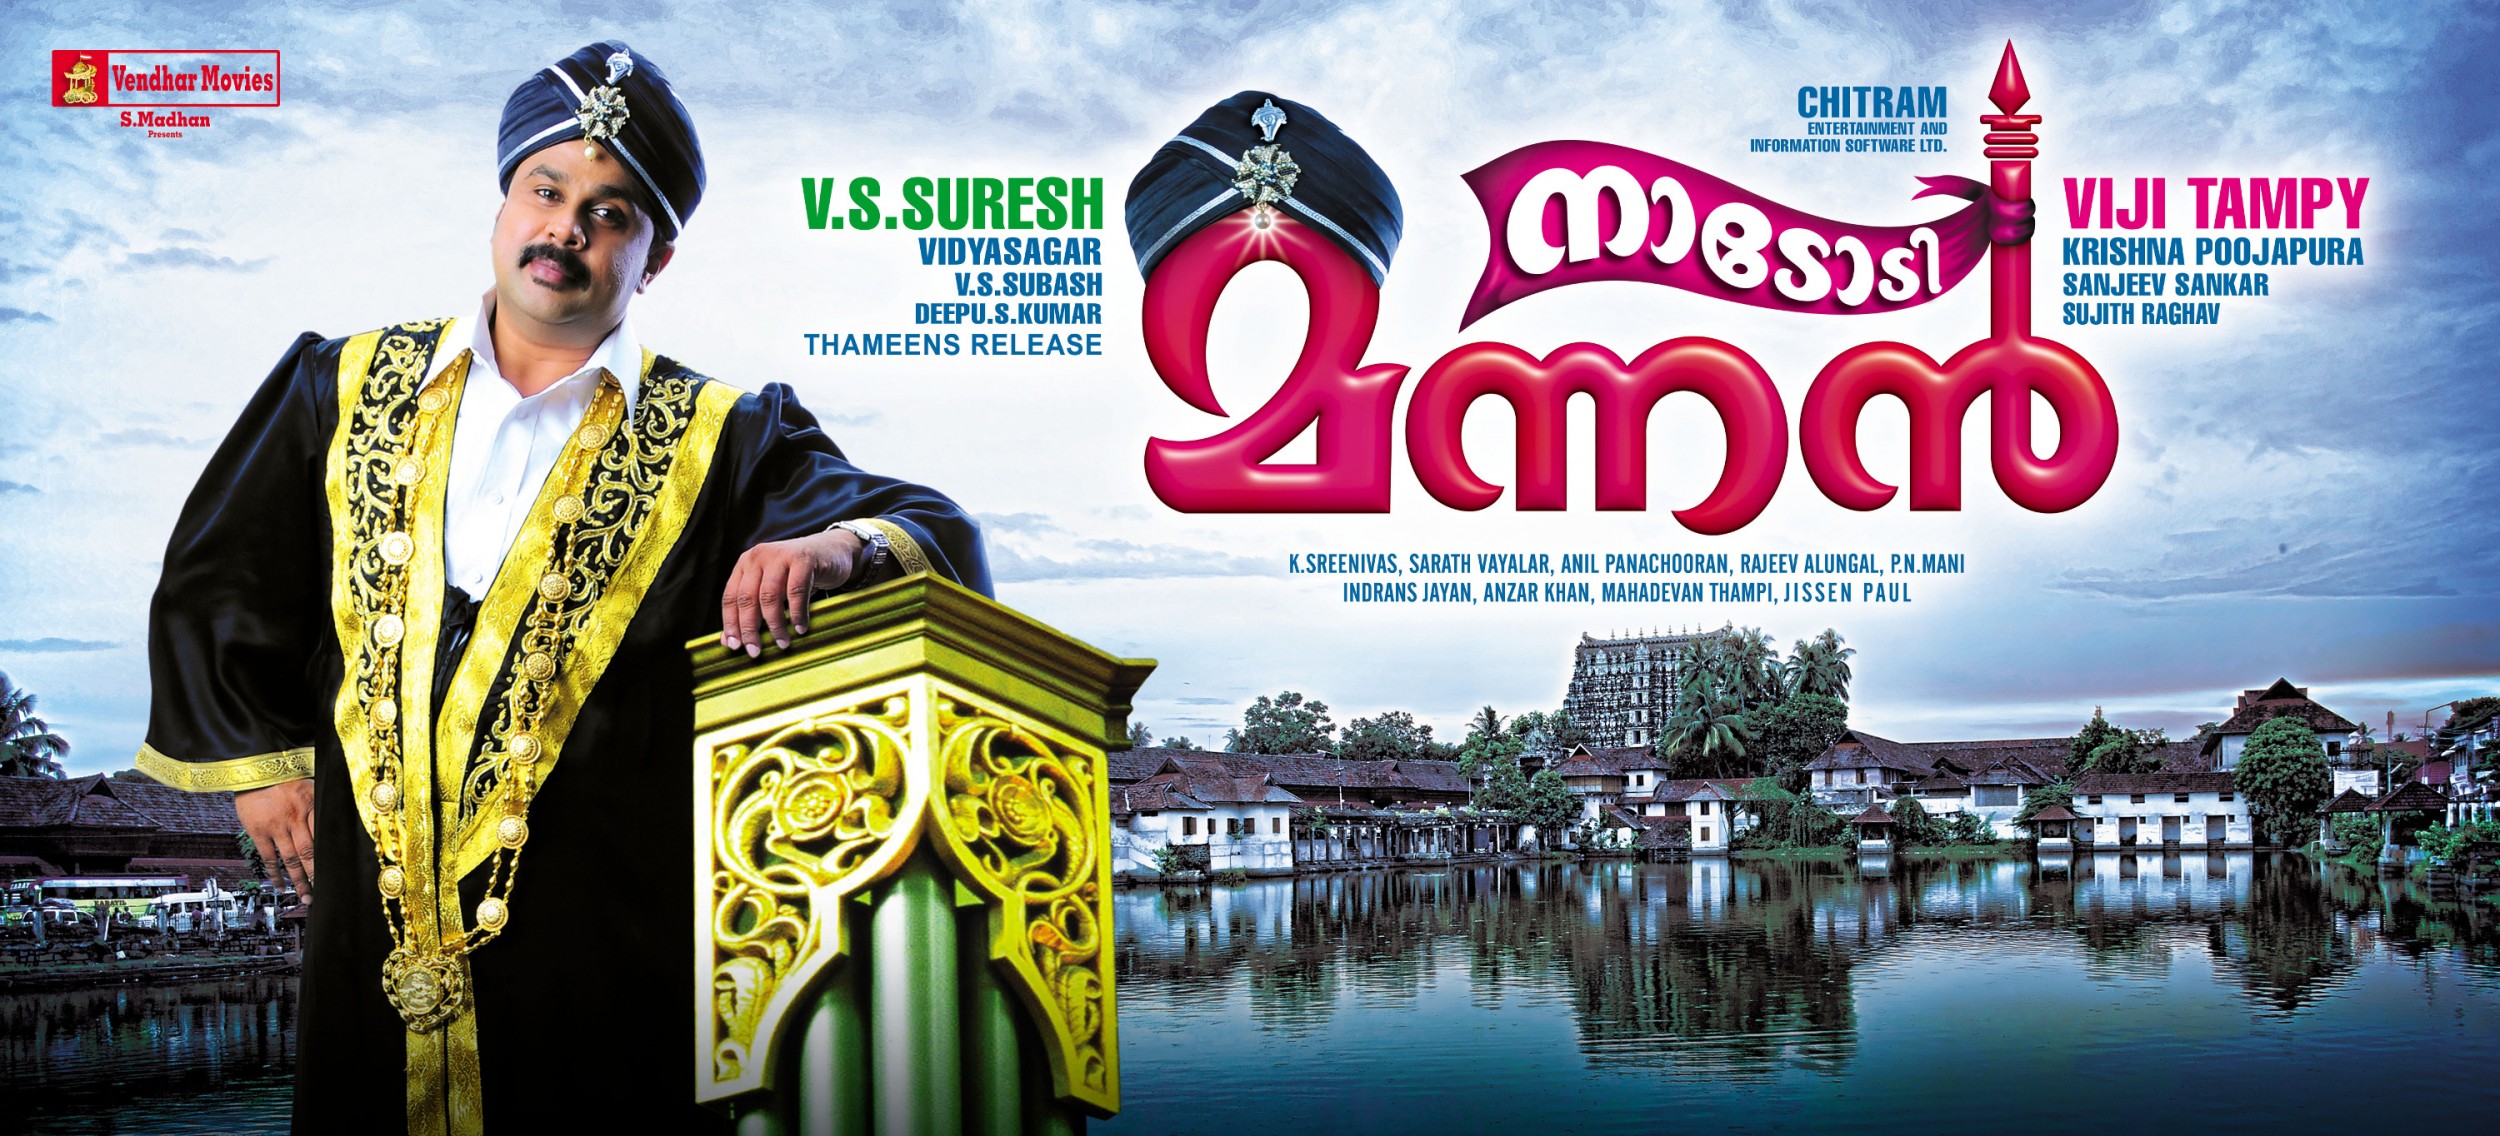 Mega Sized Movie Poster Image for Nadodimannan (#2 of 2)